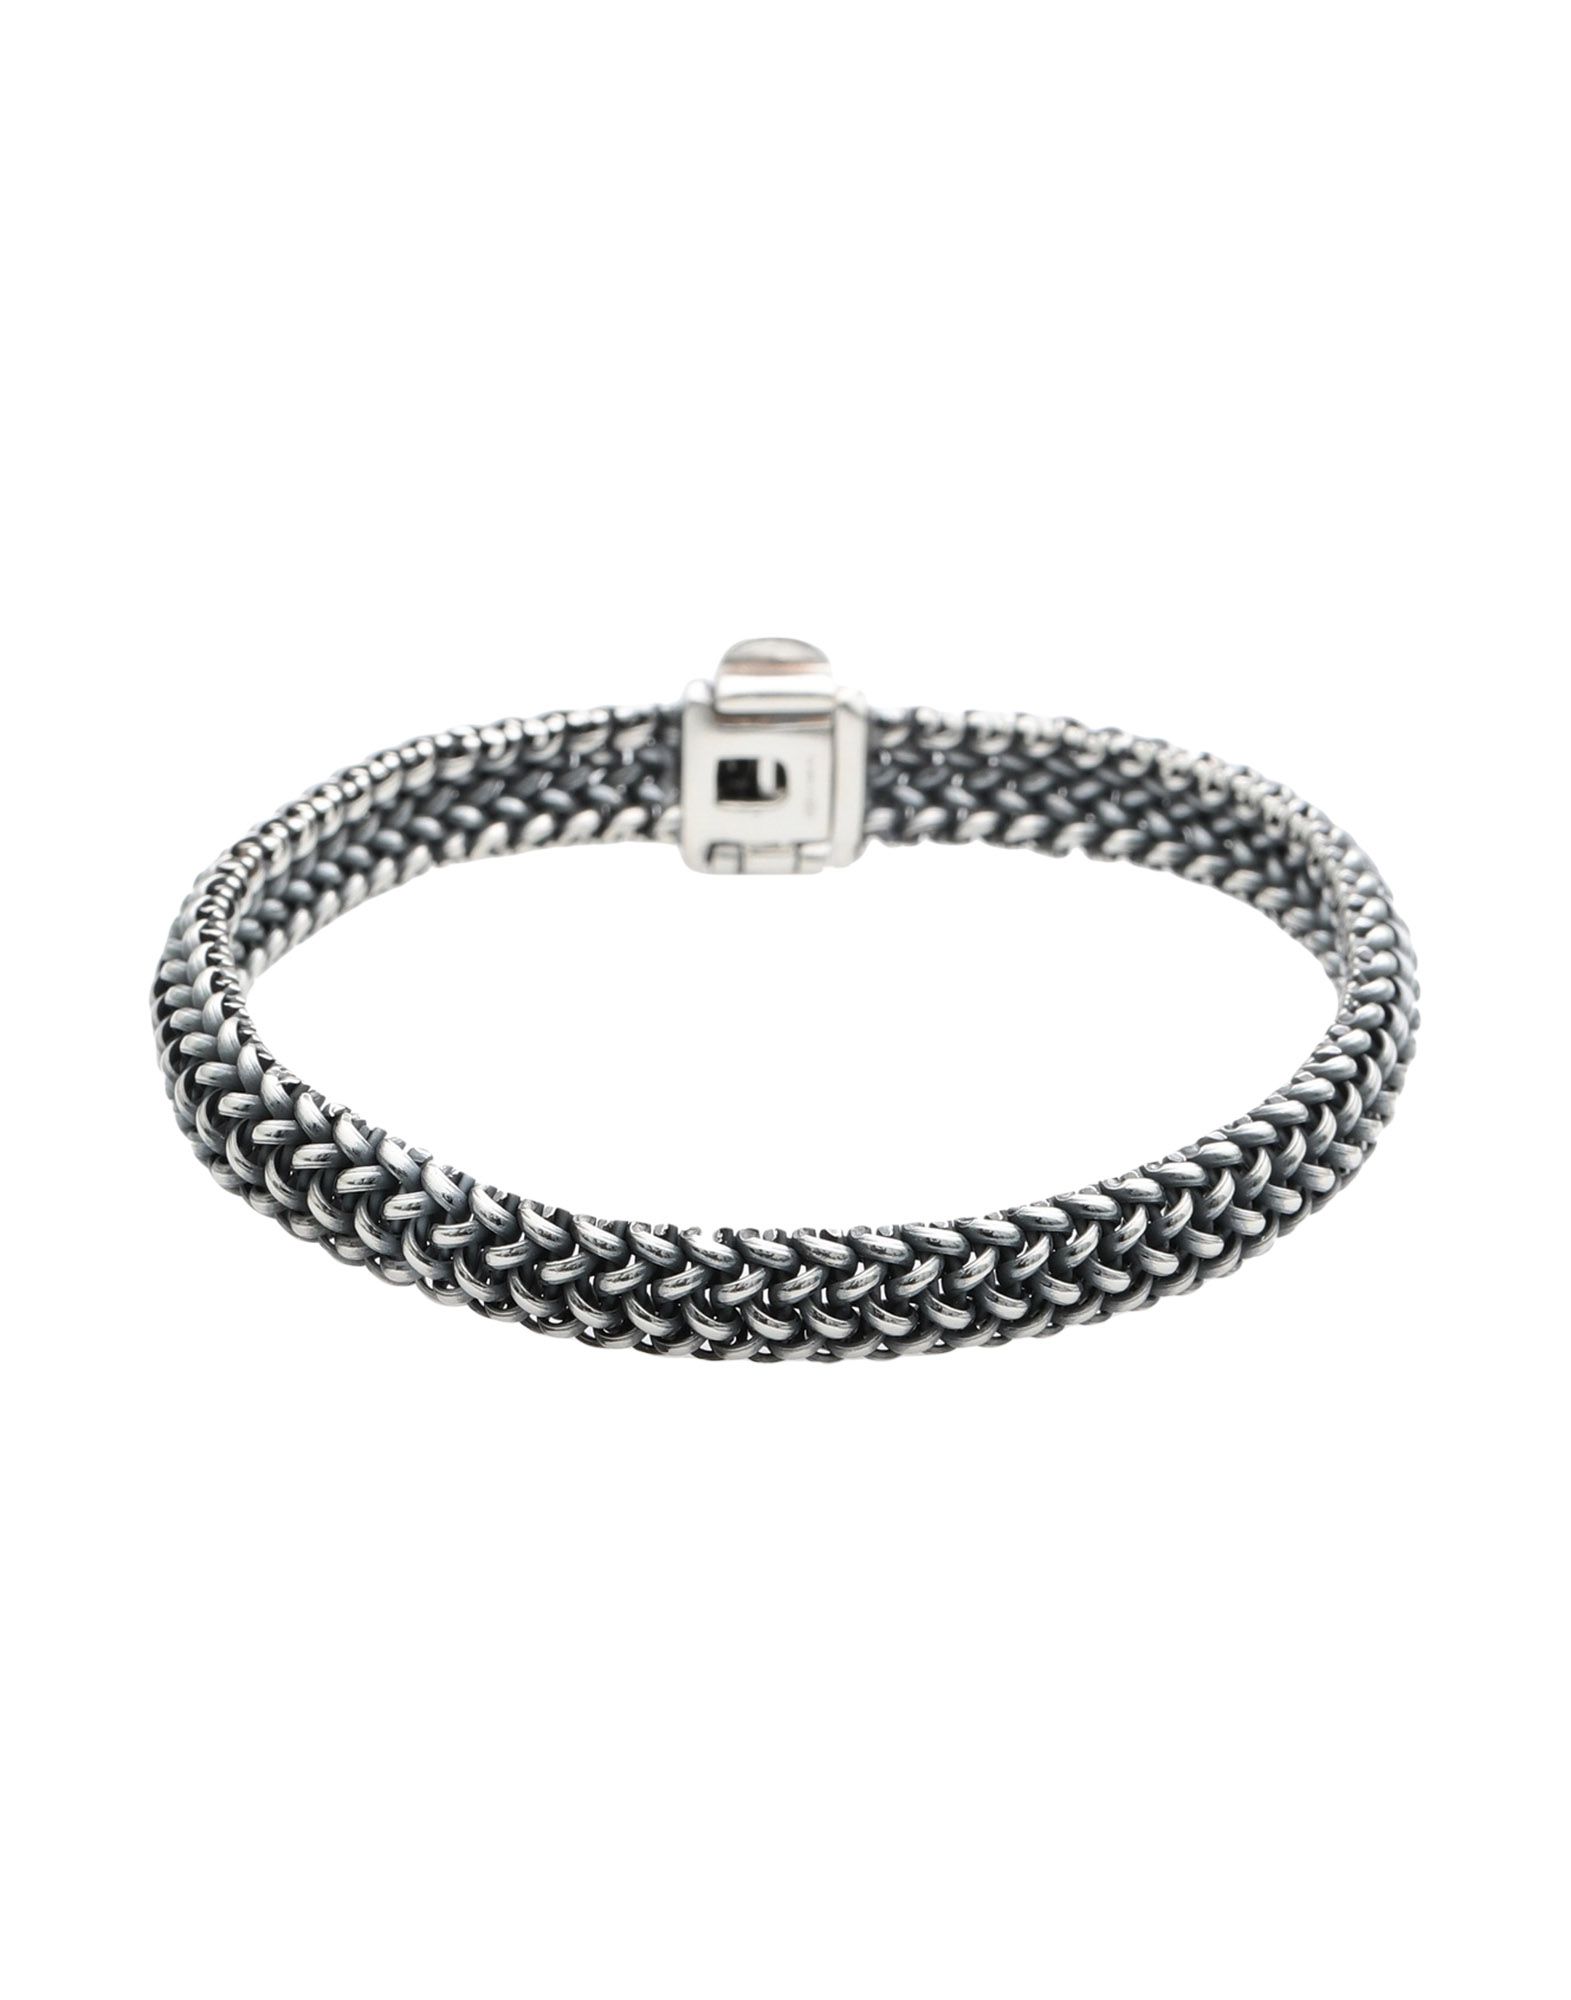 UGO CACCIATORI Bracelets - Item 50225275